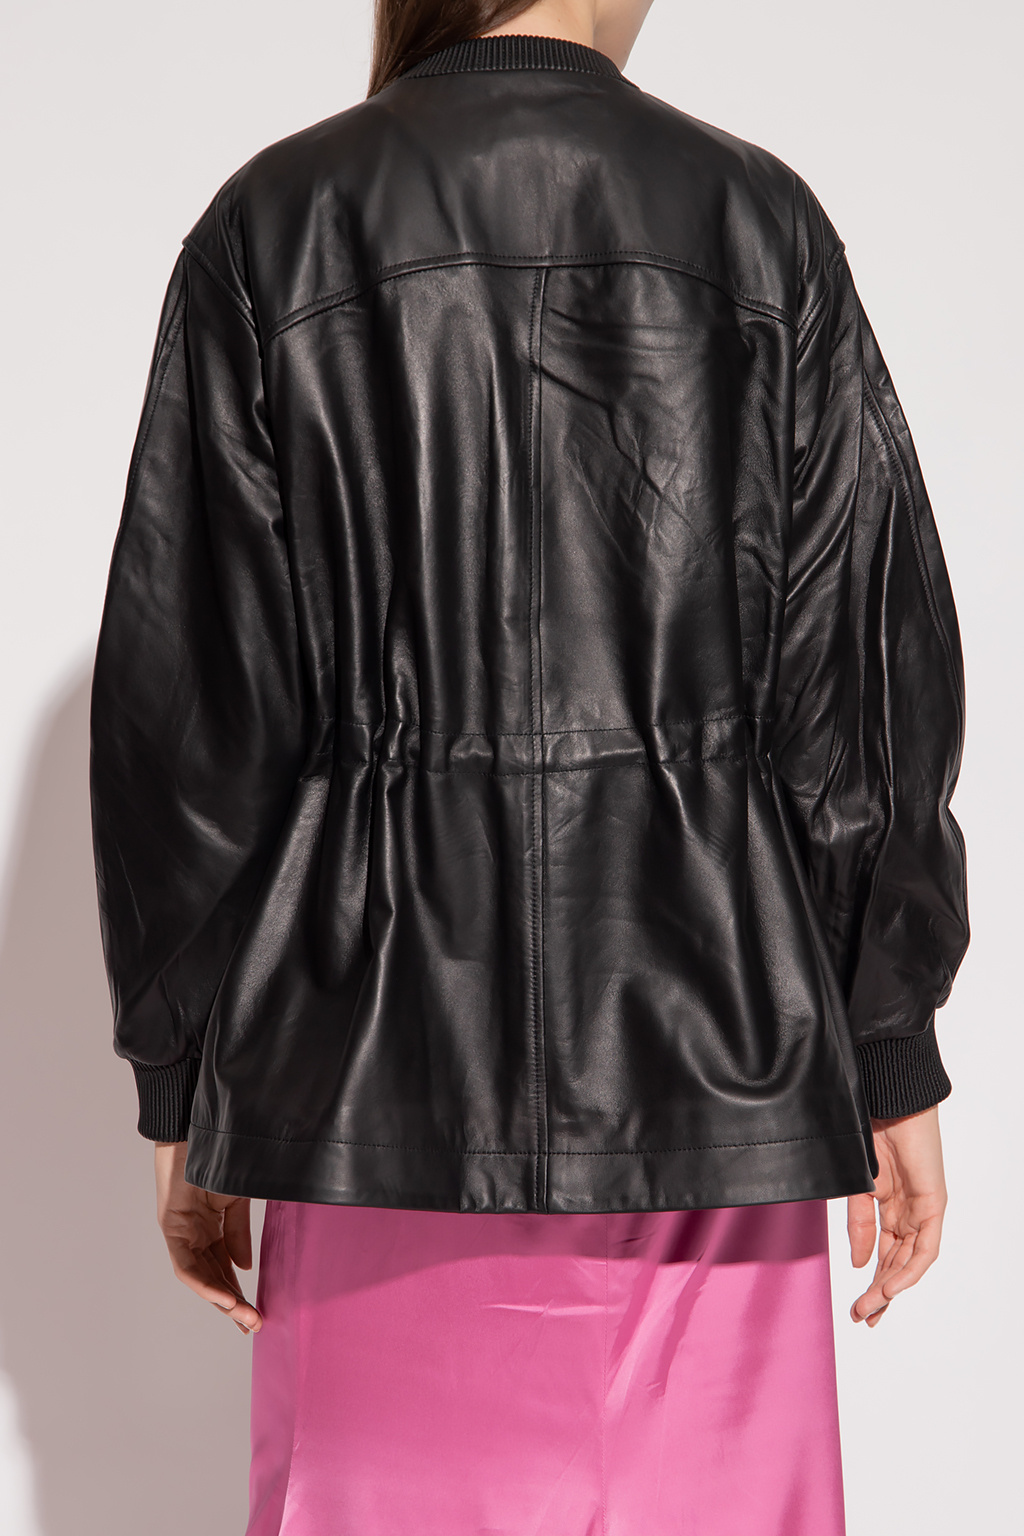 proenza mit Schouler White Label Leather jacket